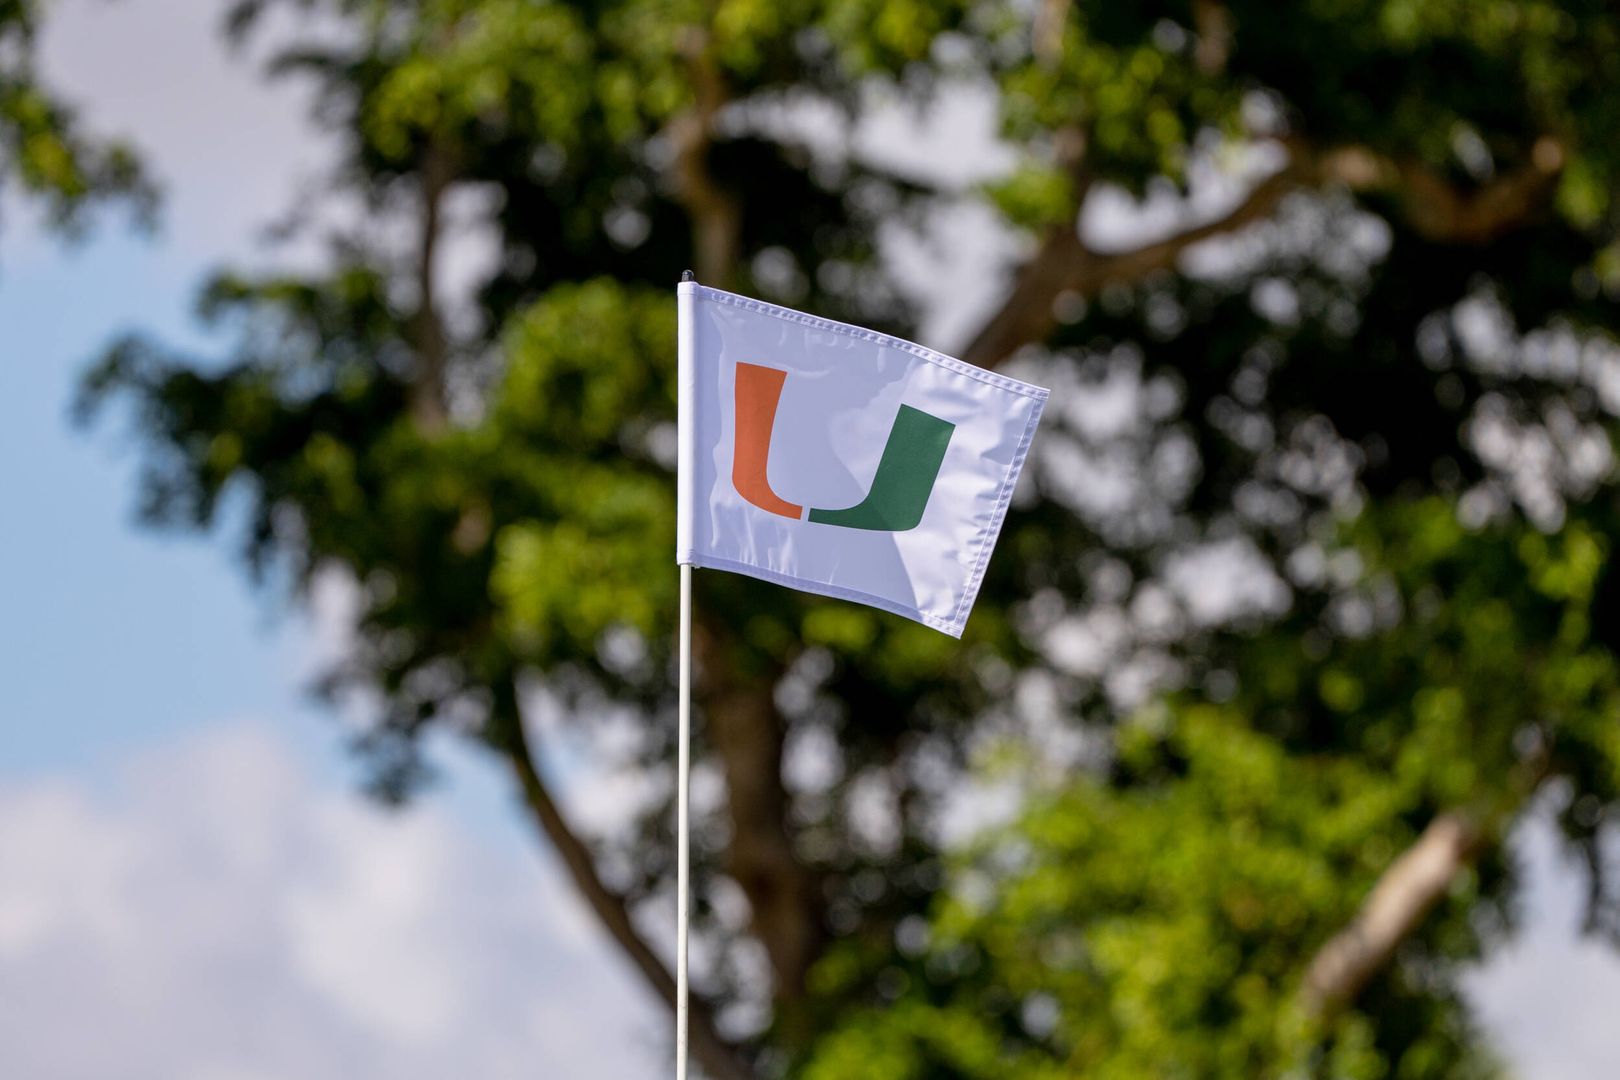 Miami Golf Set to Start the Spring Slate